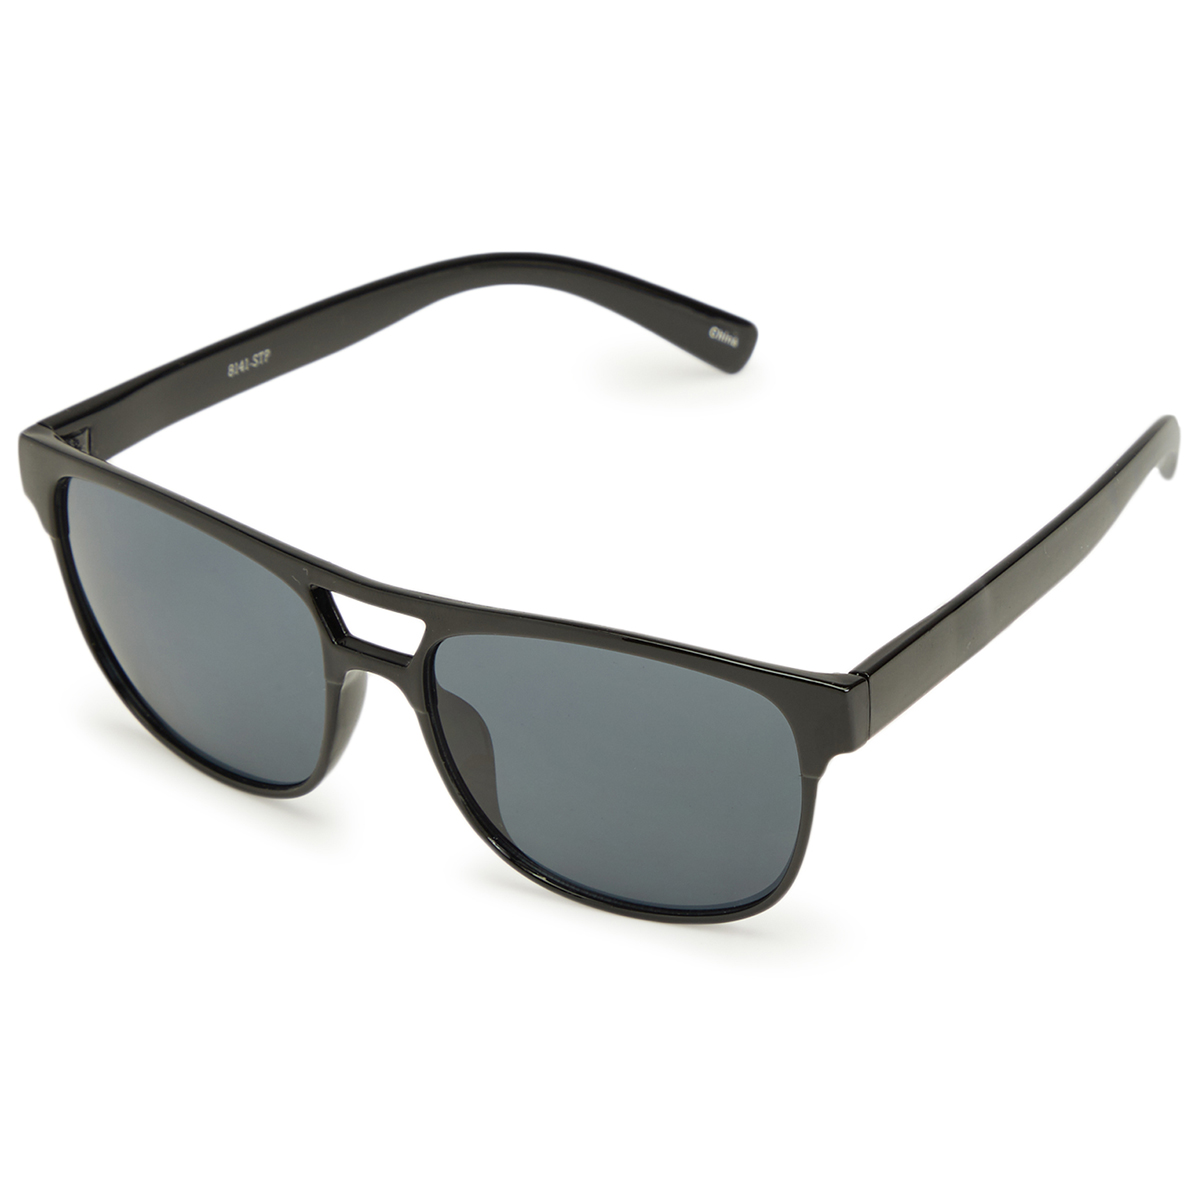 Mountain Shades Wayfarer Sunglasses